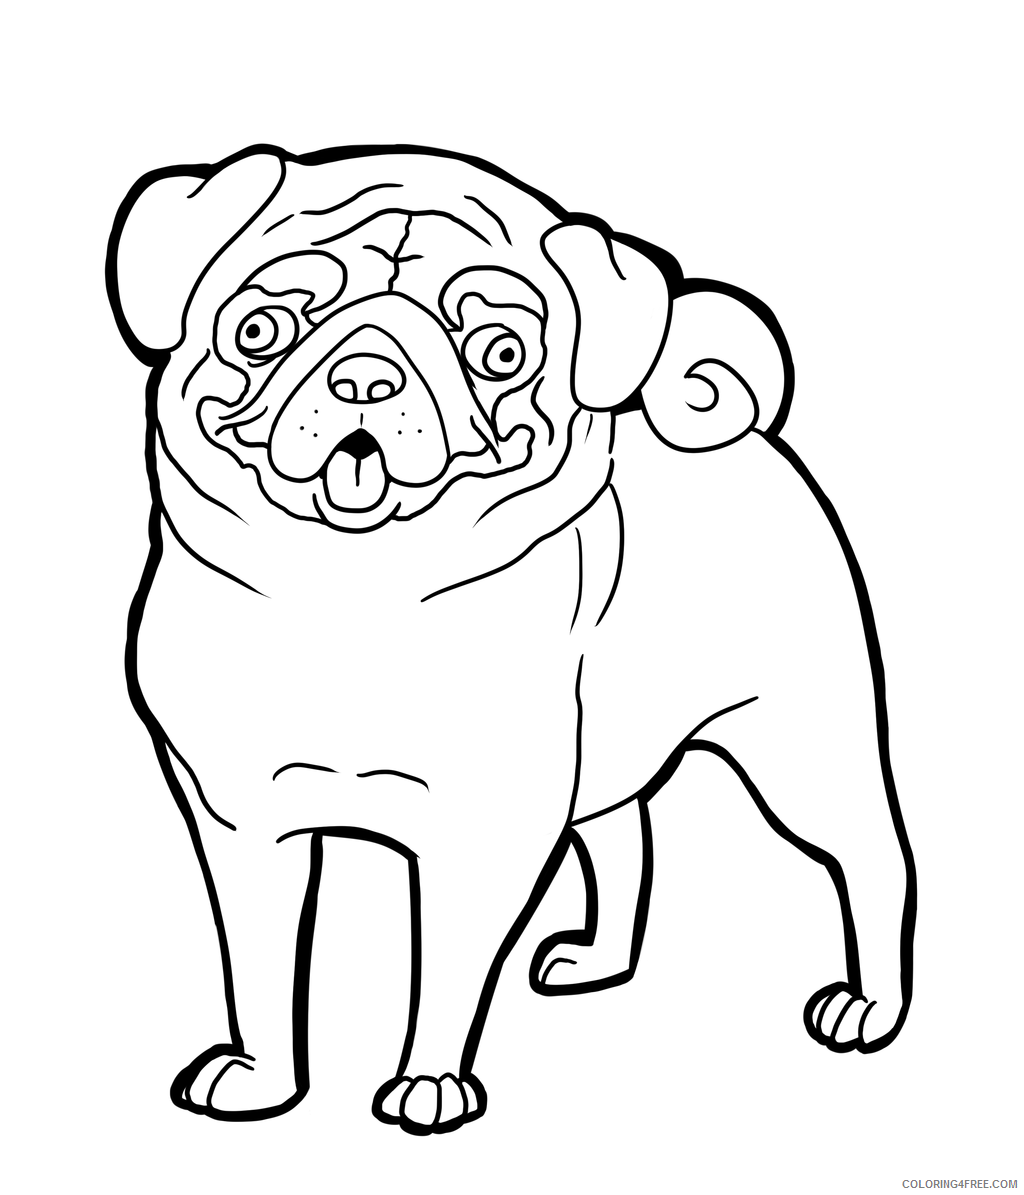 Pug Coloring Pages Animal Printable Sheets Free Pug 2021 4047 Coloring4free